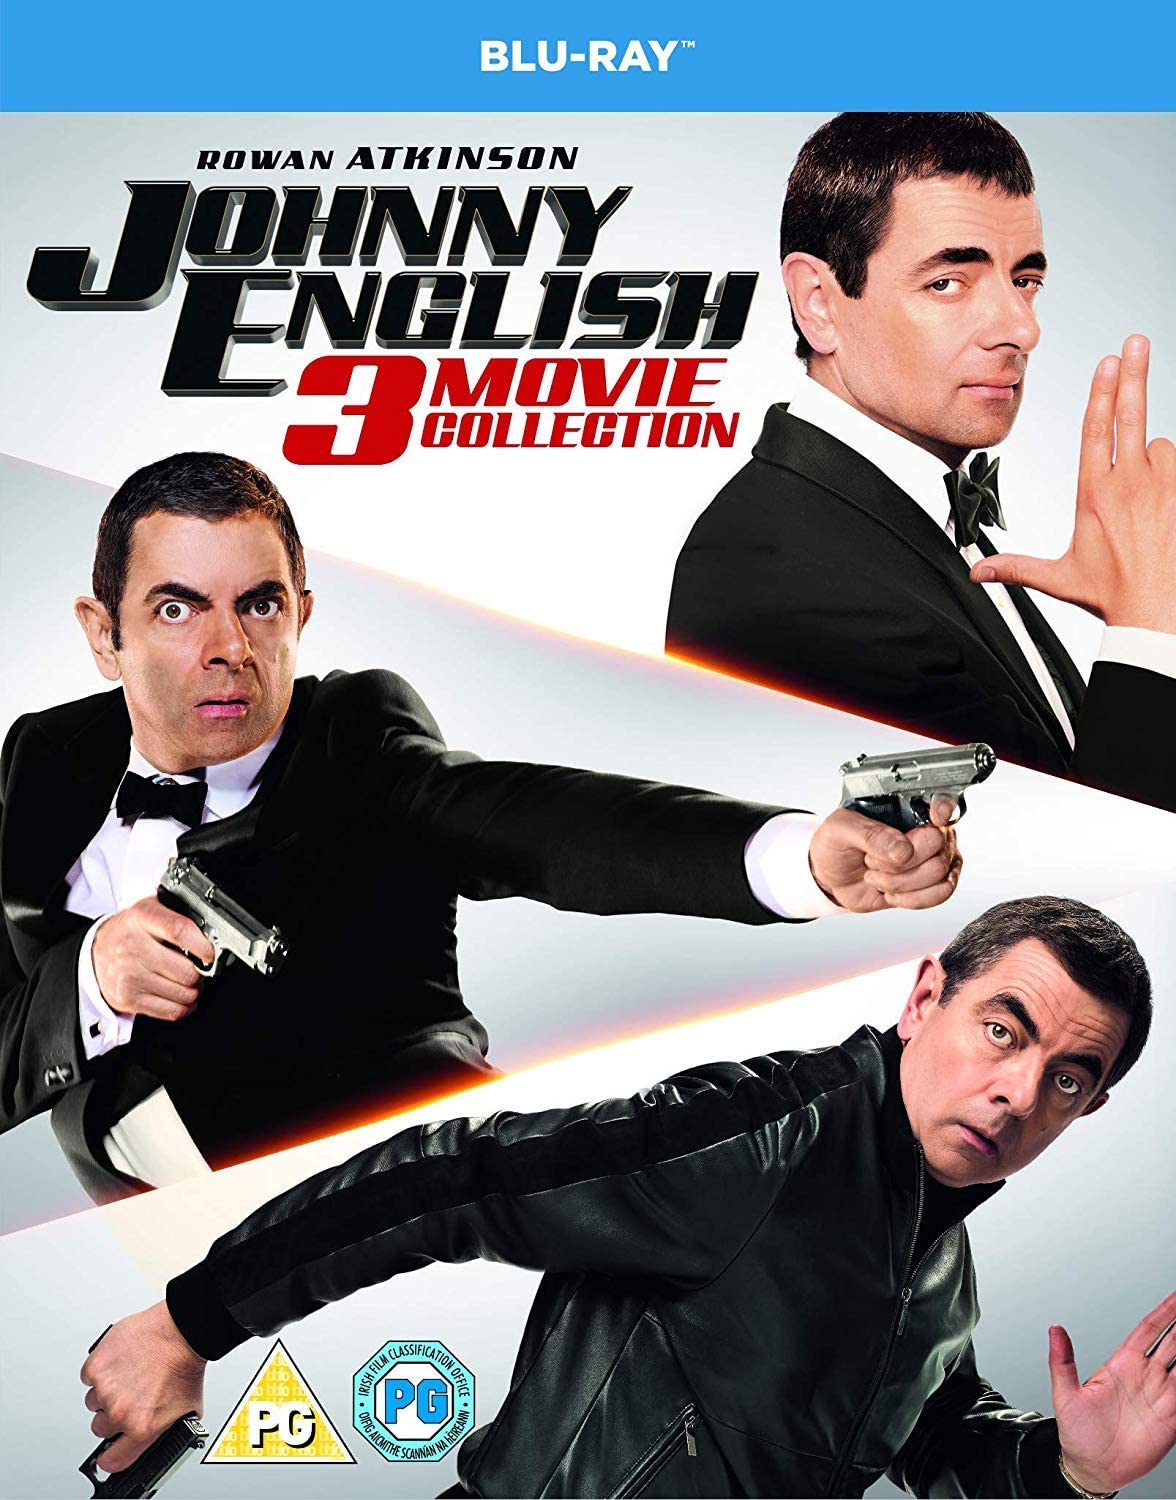 Johnny English 3 Film Collection (Blu-ray)